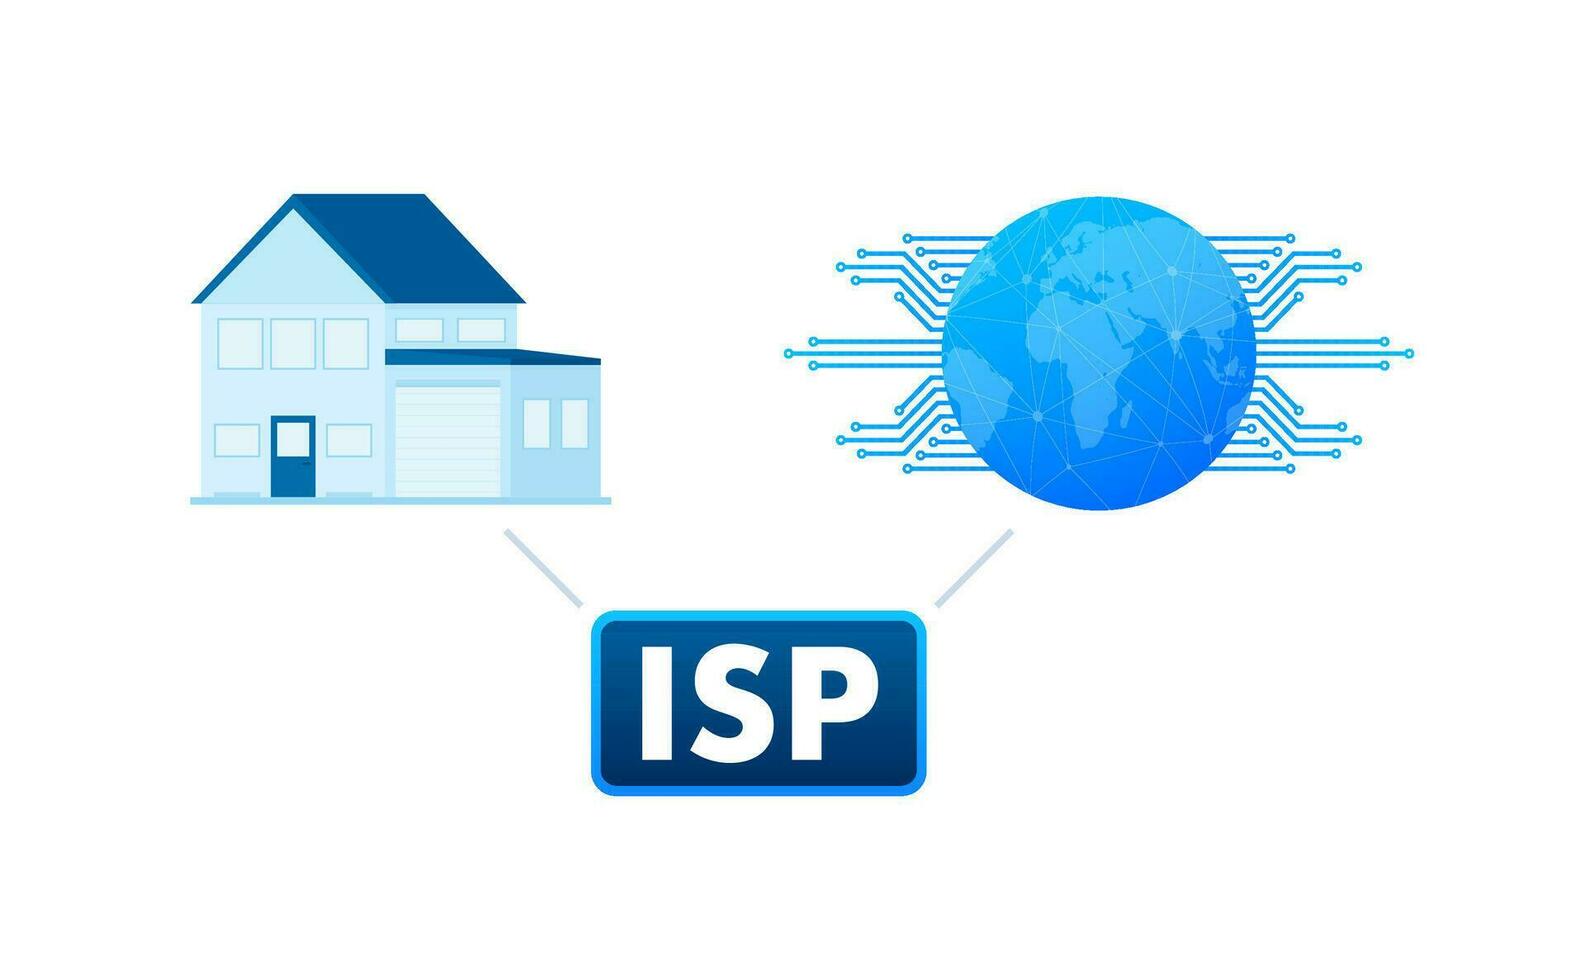 ISP   Internet Service Provider. Company that provides web access. Vector stock illustration